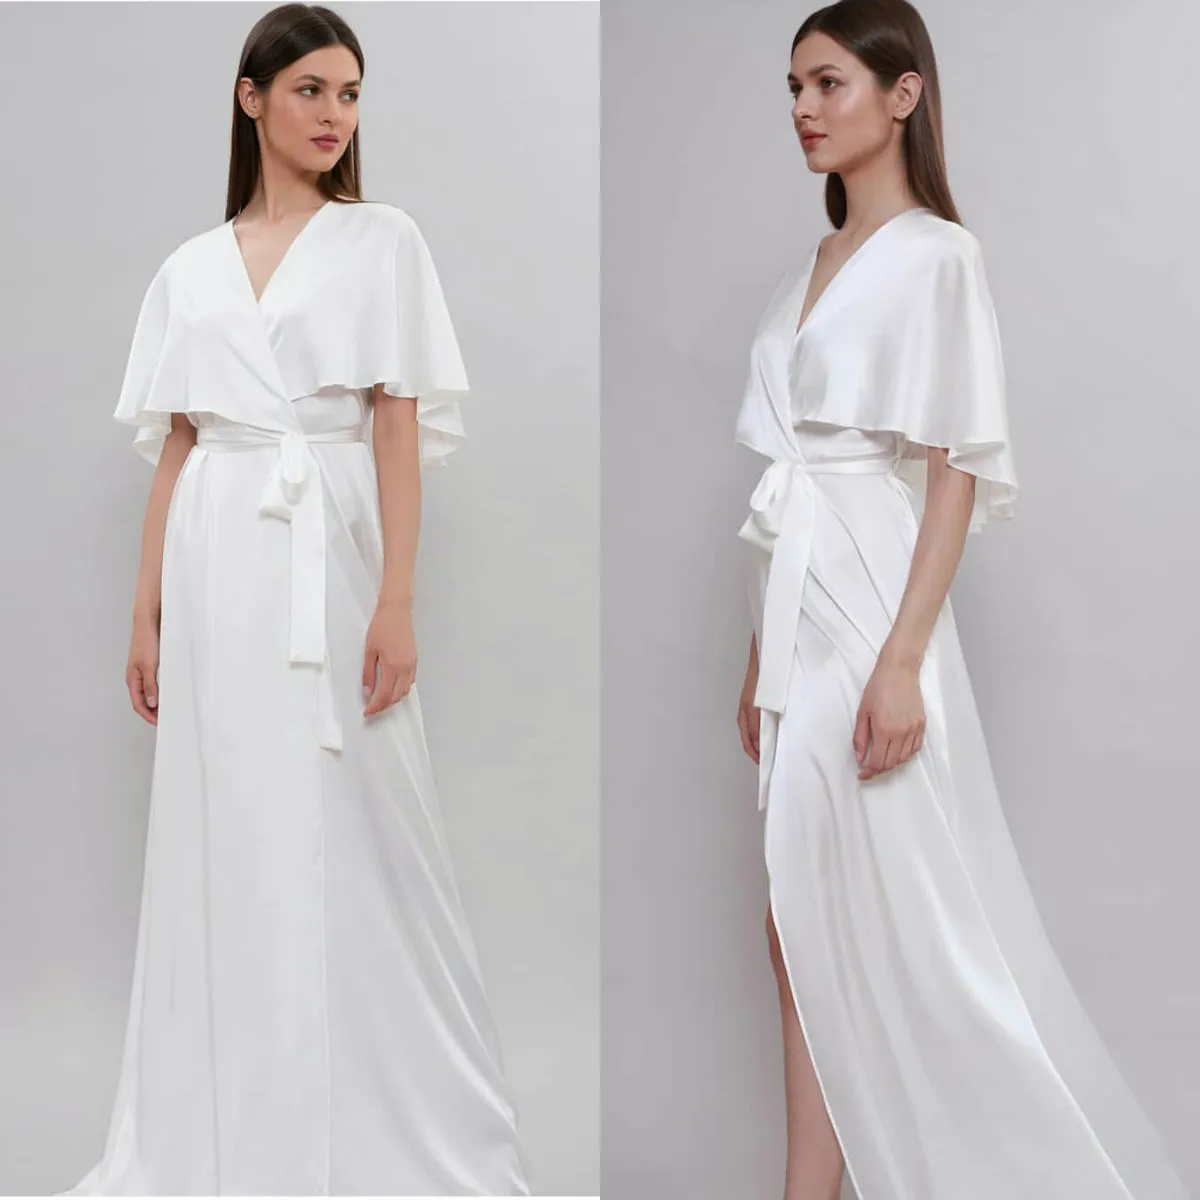 Cheap White Wedding Robes V-neck Ruffle Satin Bathrobes Pajamas Sleepwear Custom Made Ankle-length Night Gown For Women Hot Sell